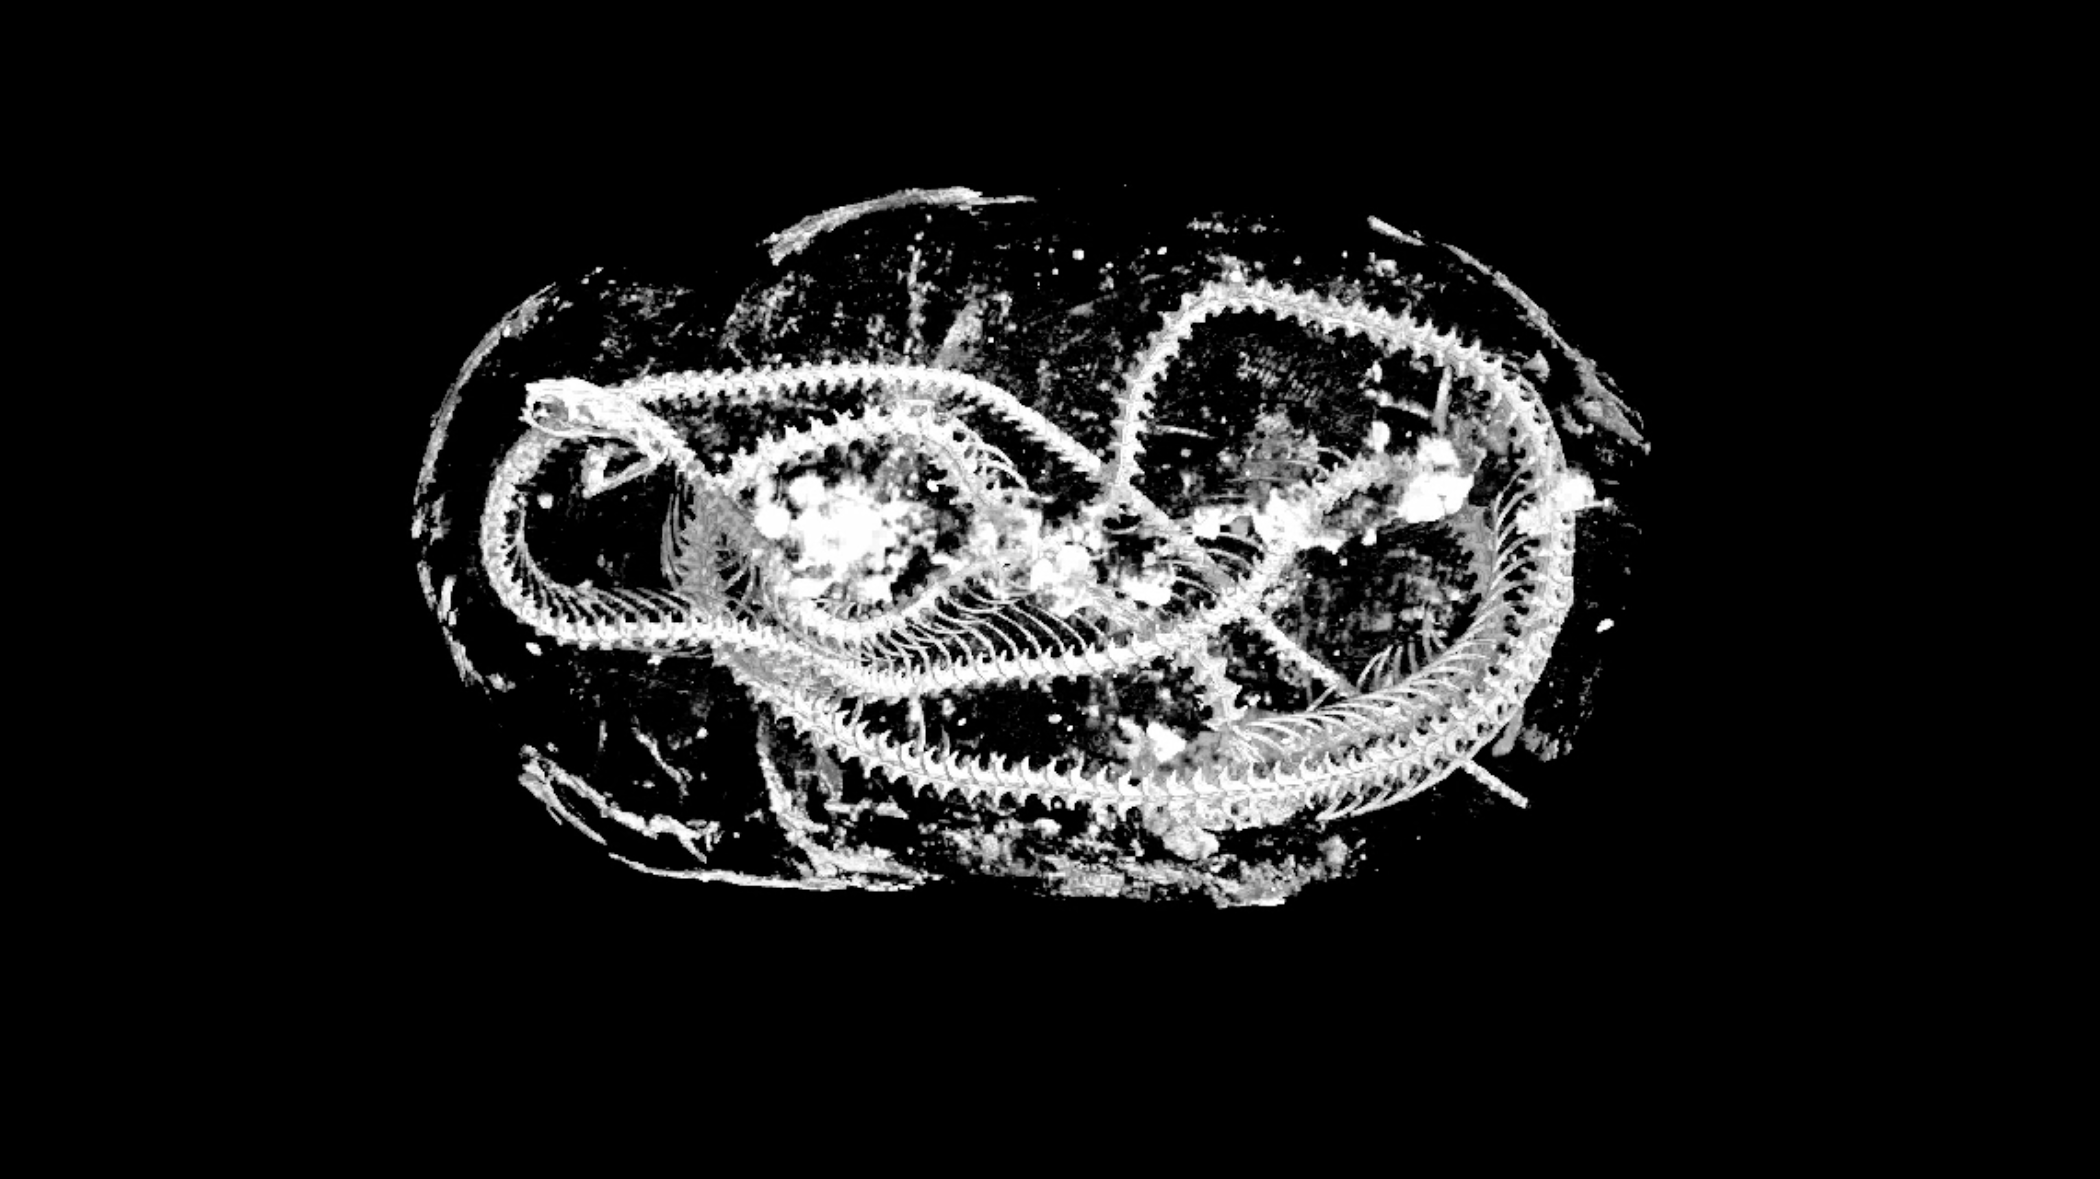 MicroCT scan showing a mummified Egyptian cobra. (Image: Swansea University)